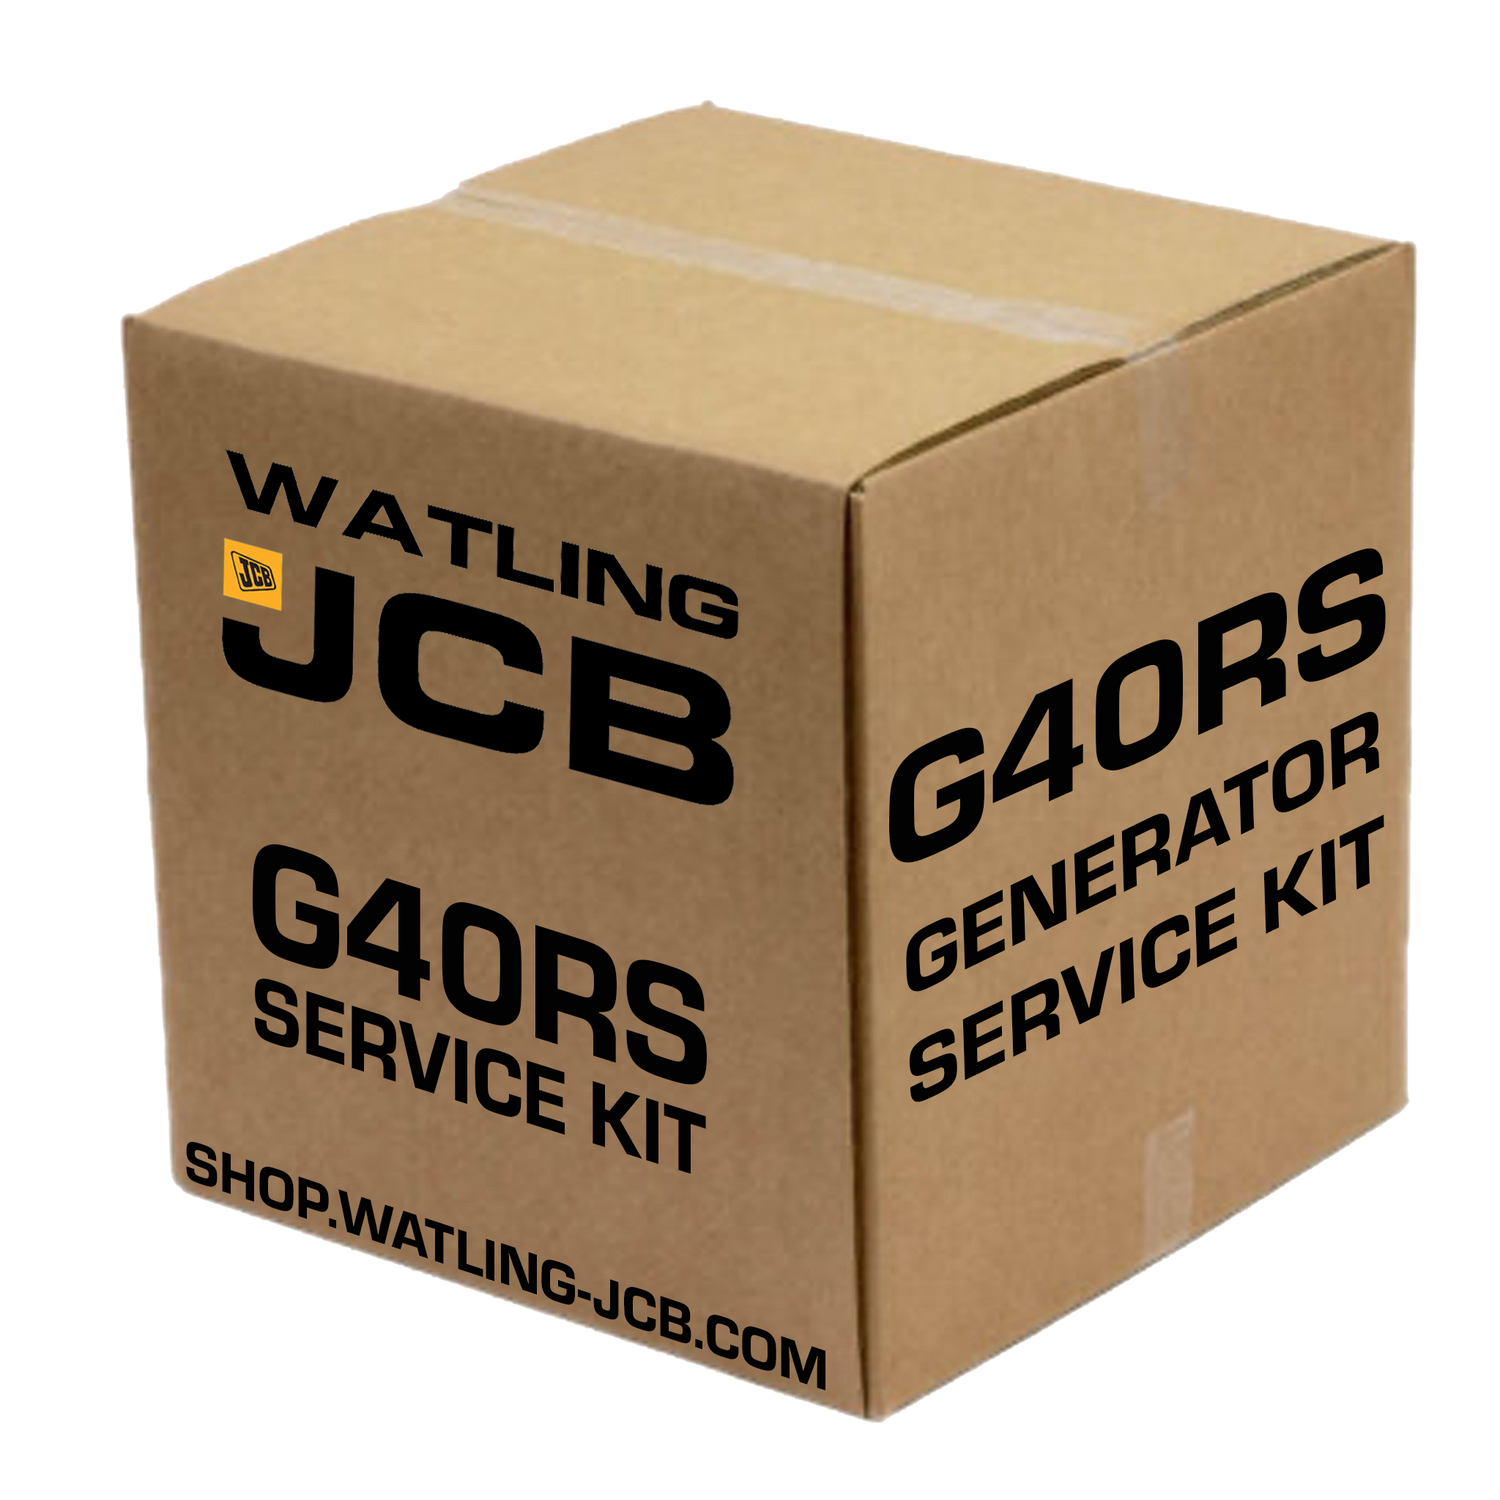 JCB G40RS Service Kits